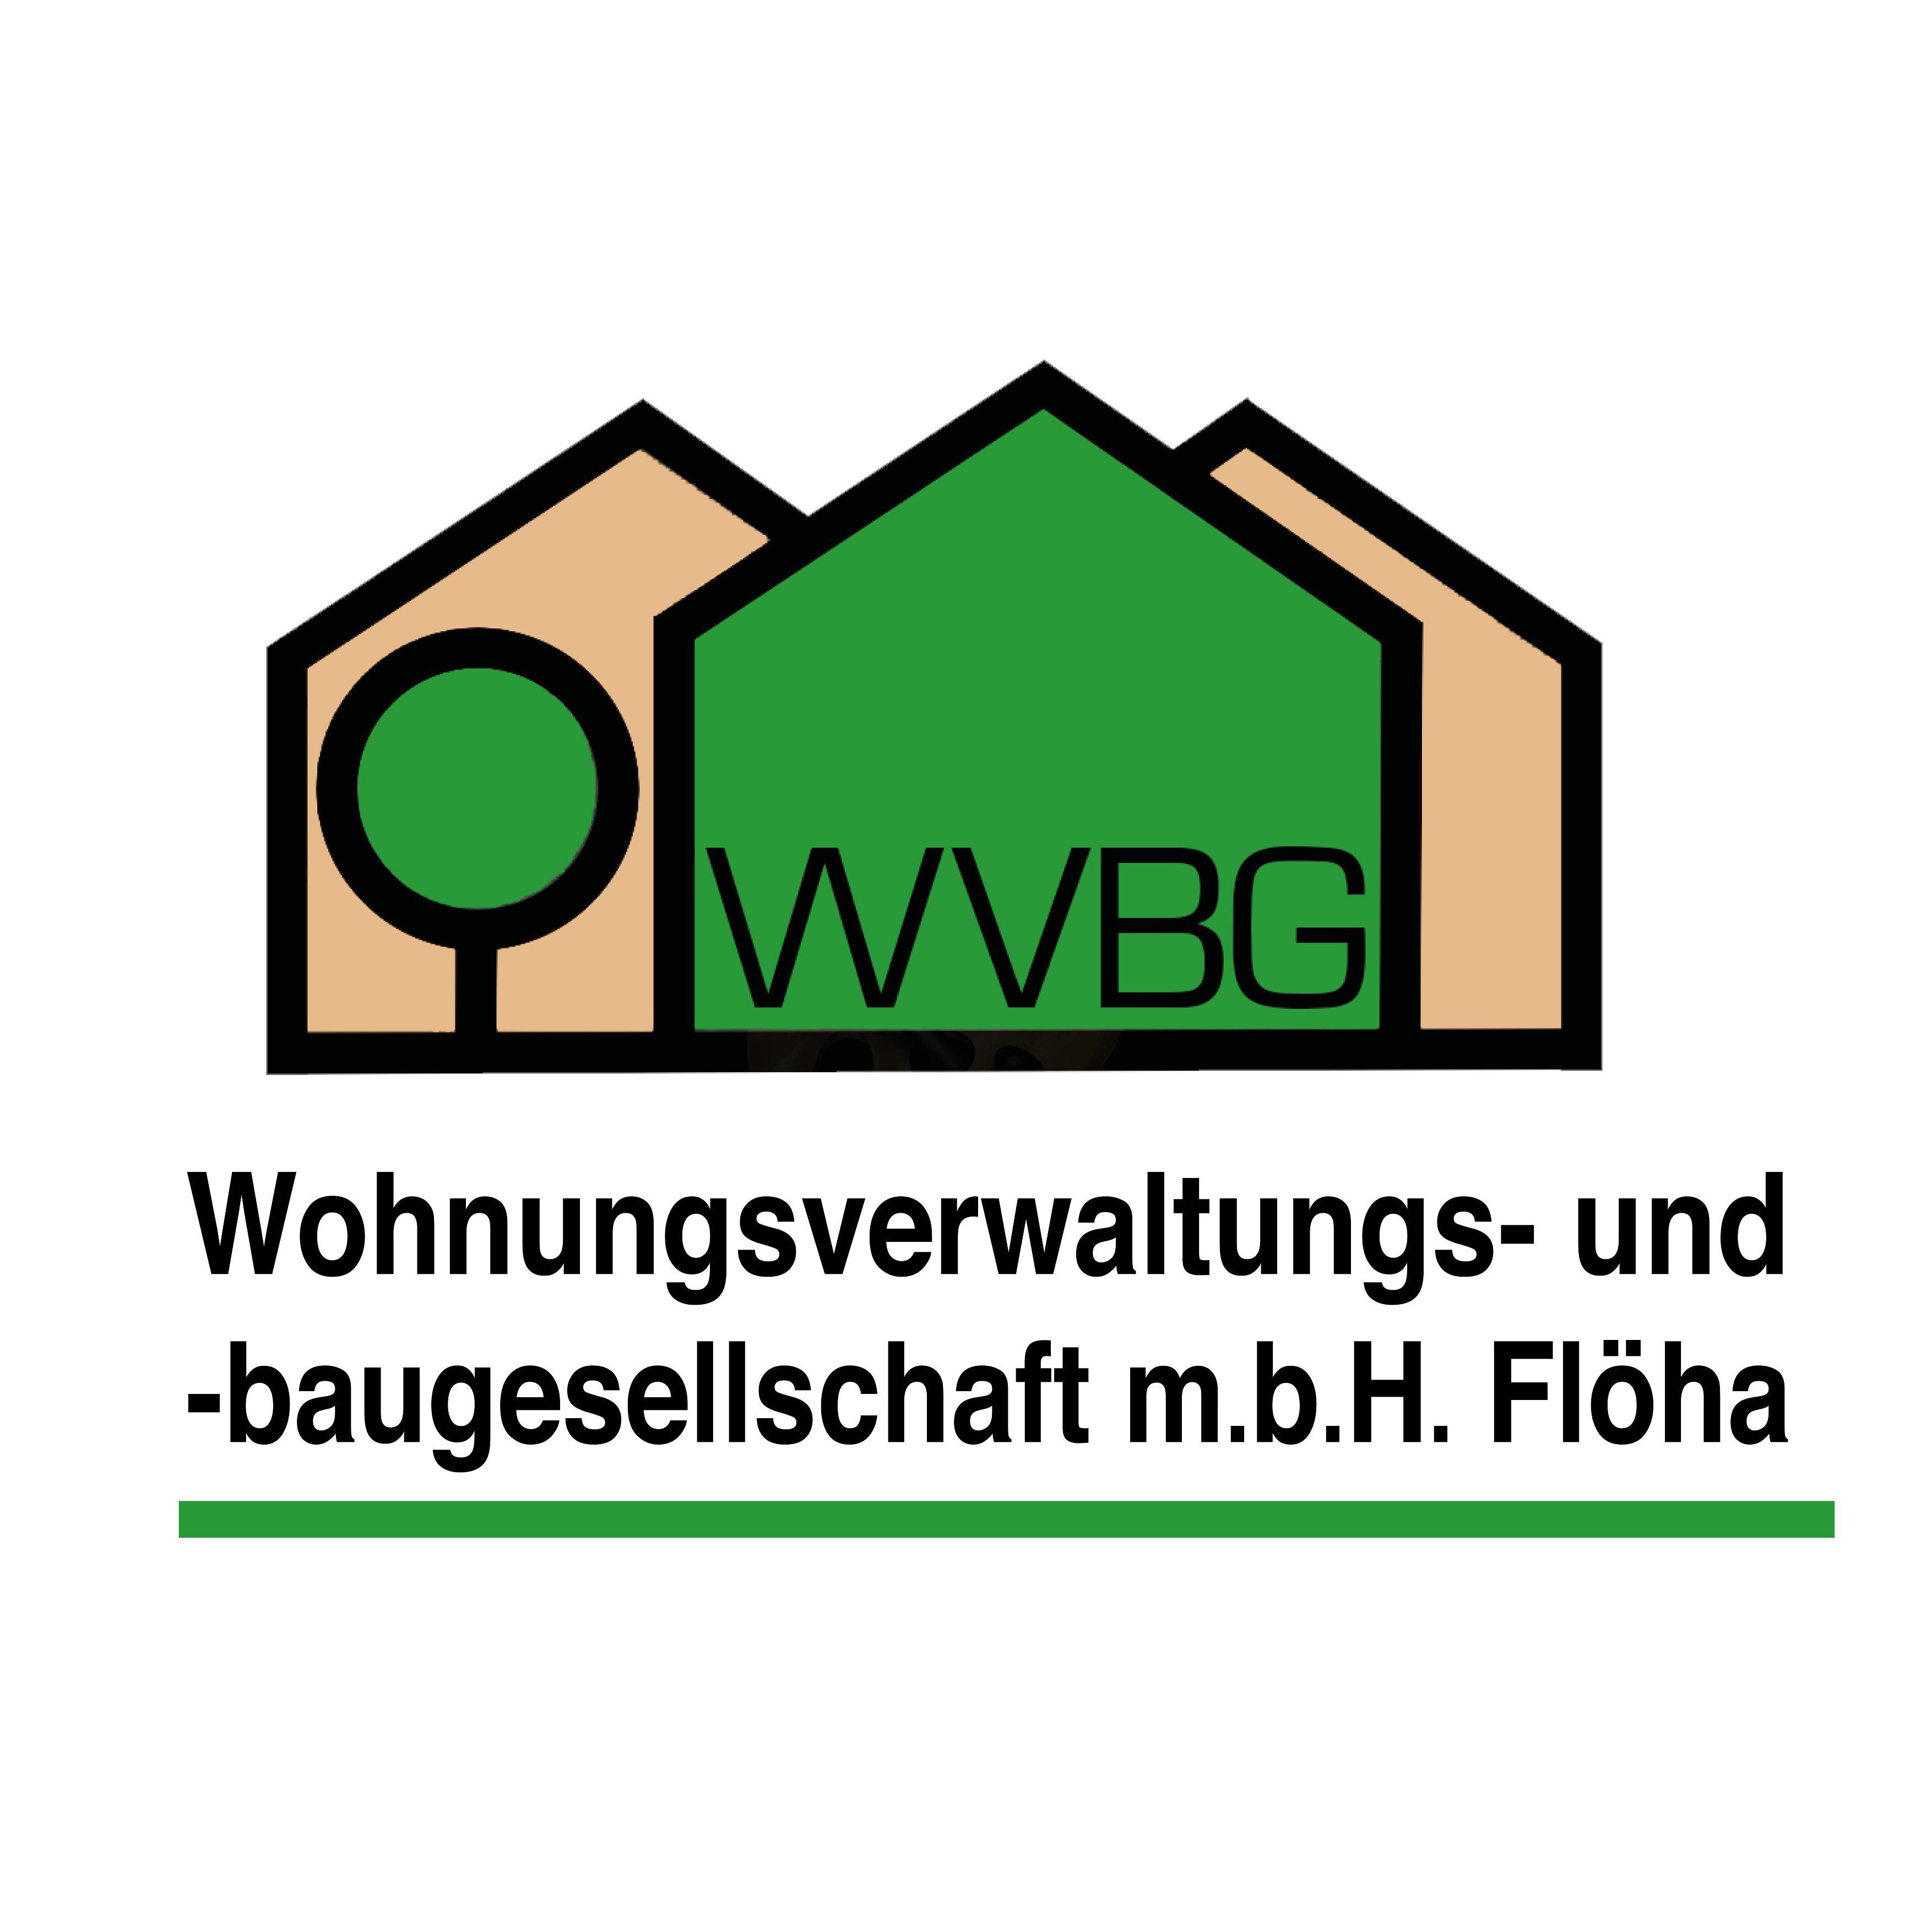 Wohnungsverwaltungs- und -baugesellschaft m.b.H. Flöha in Flöha - Logo